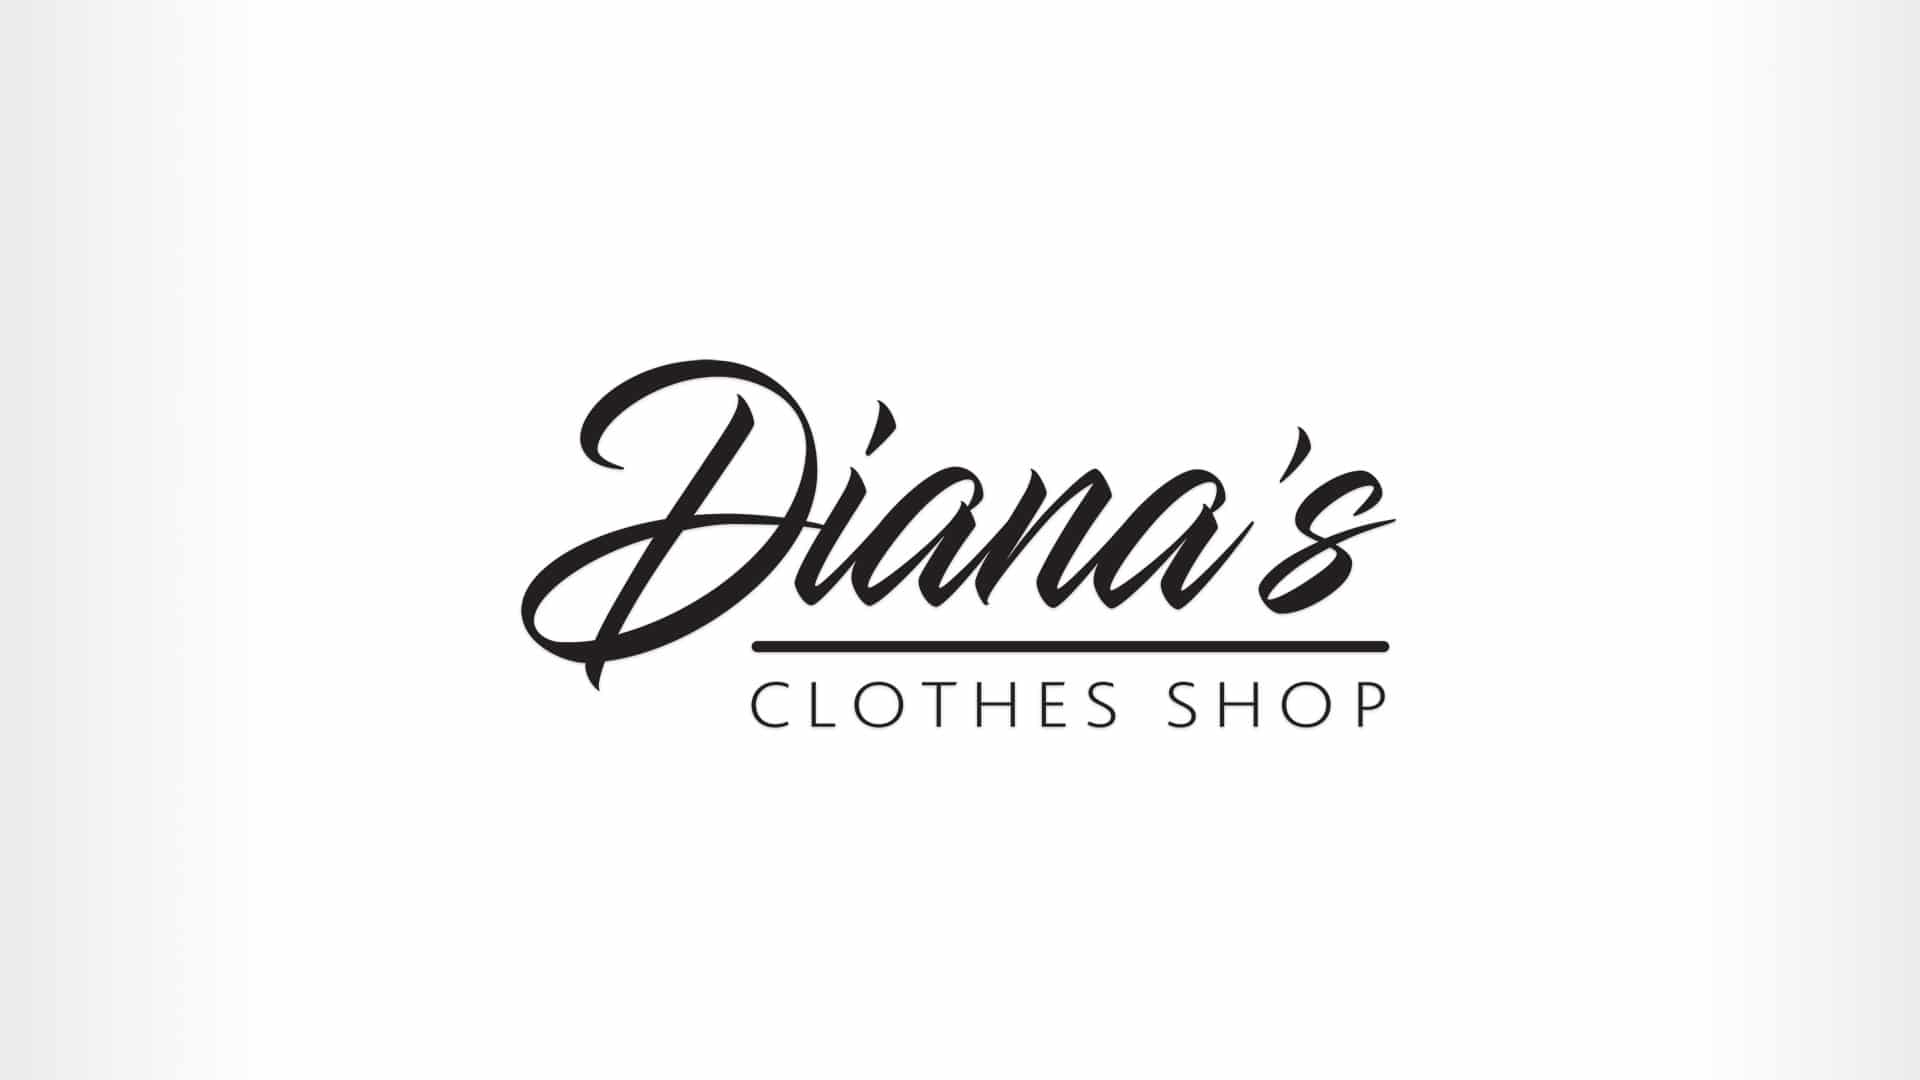 Diana Logo - LogoDix